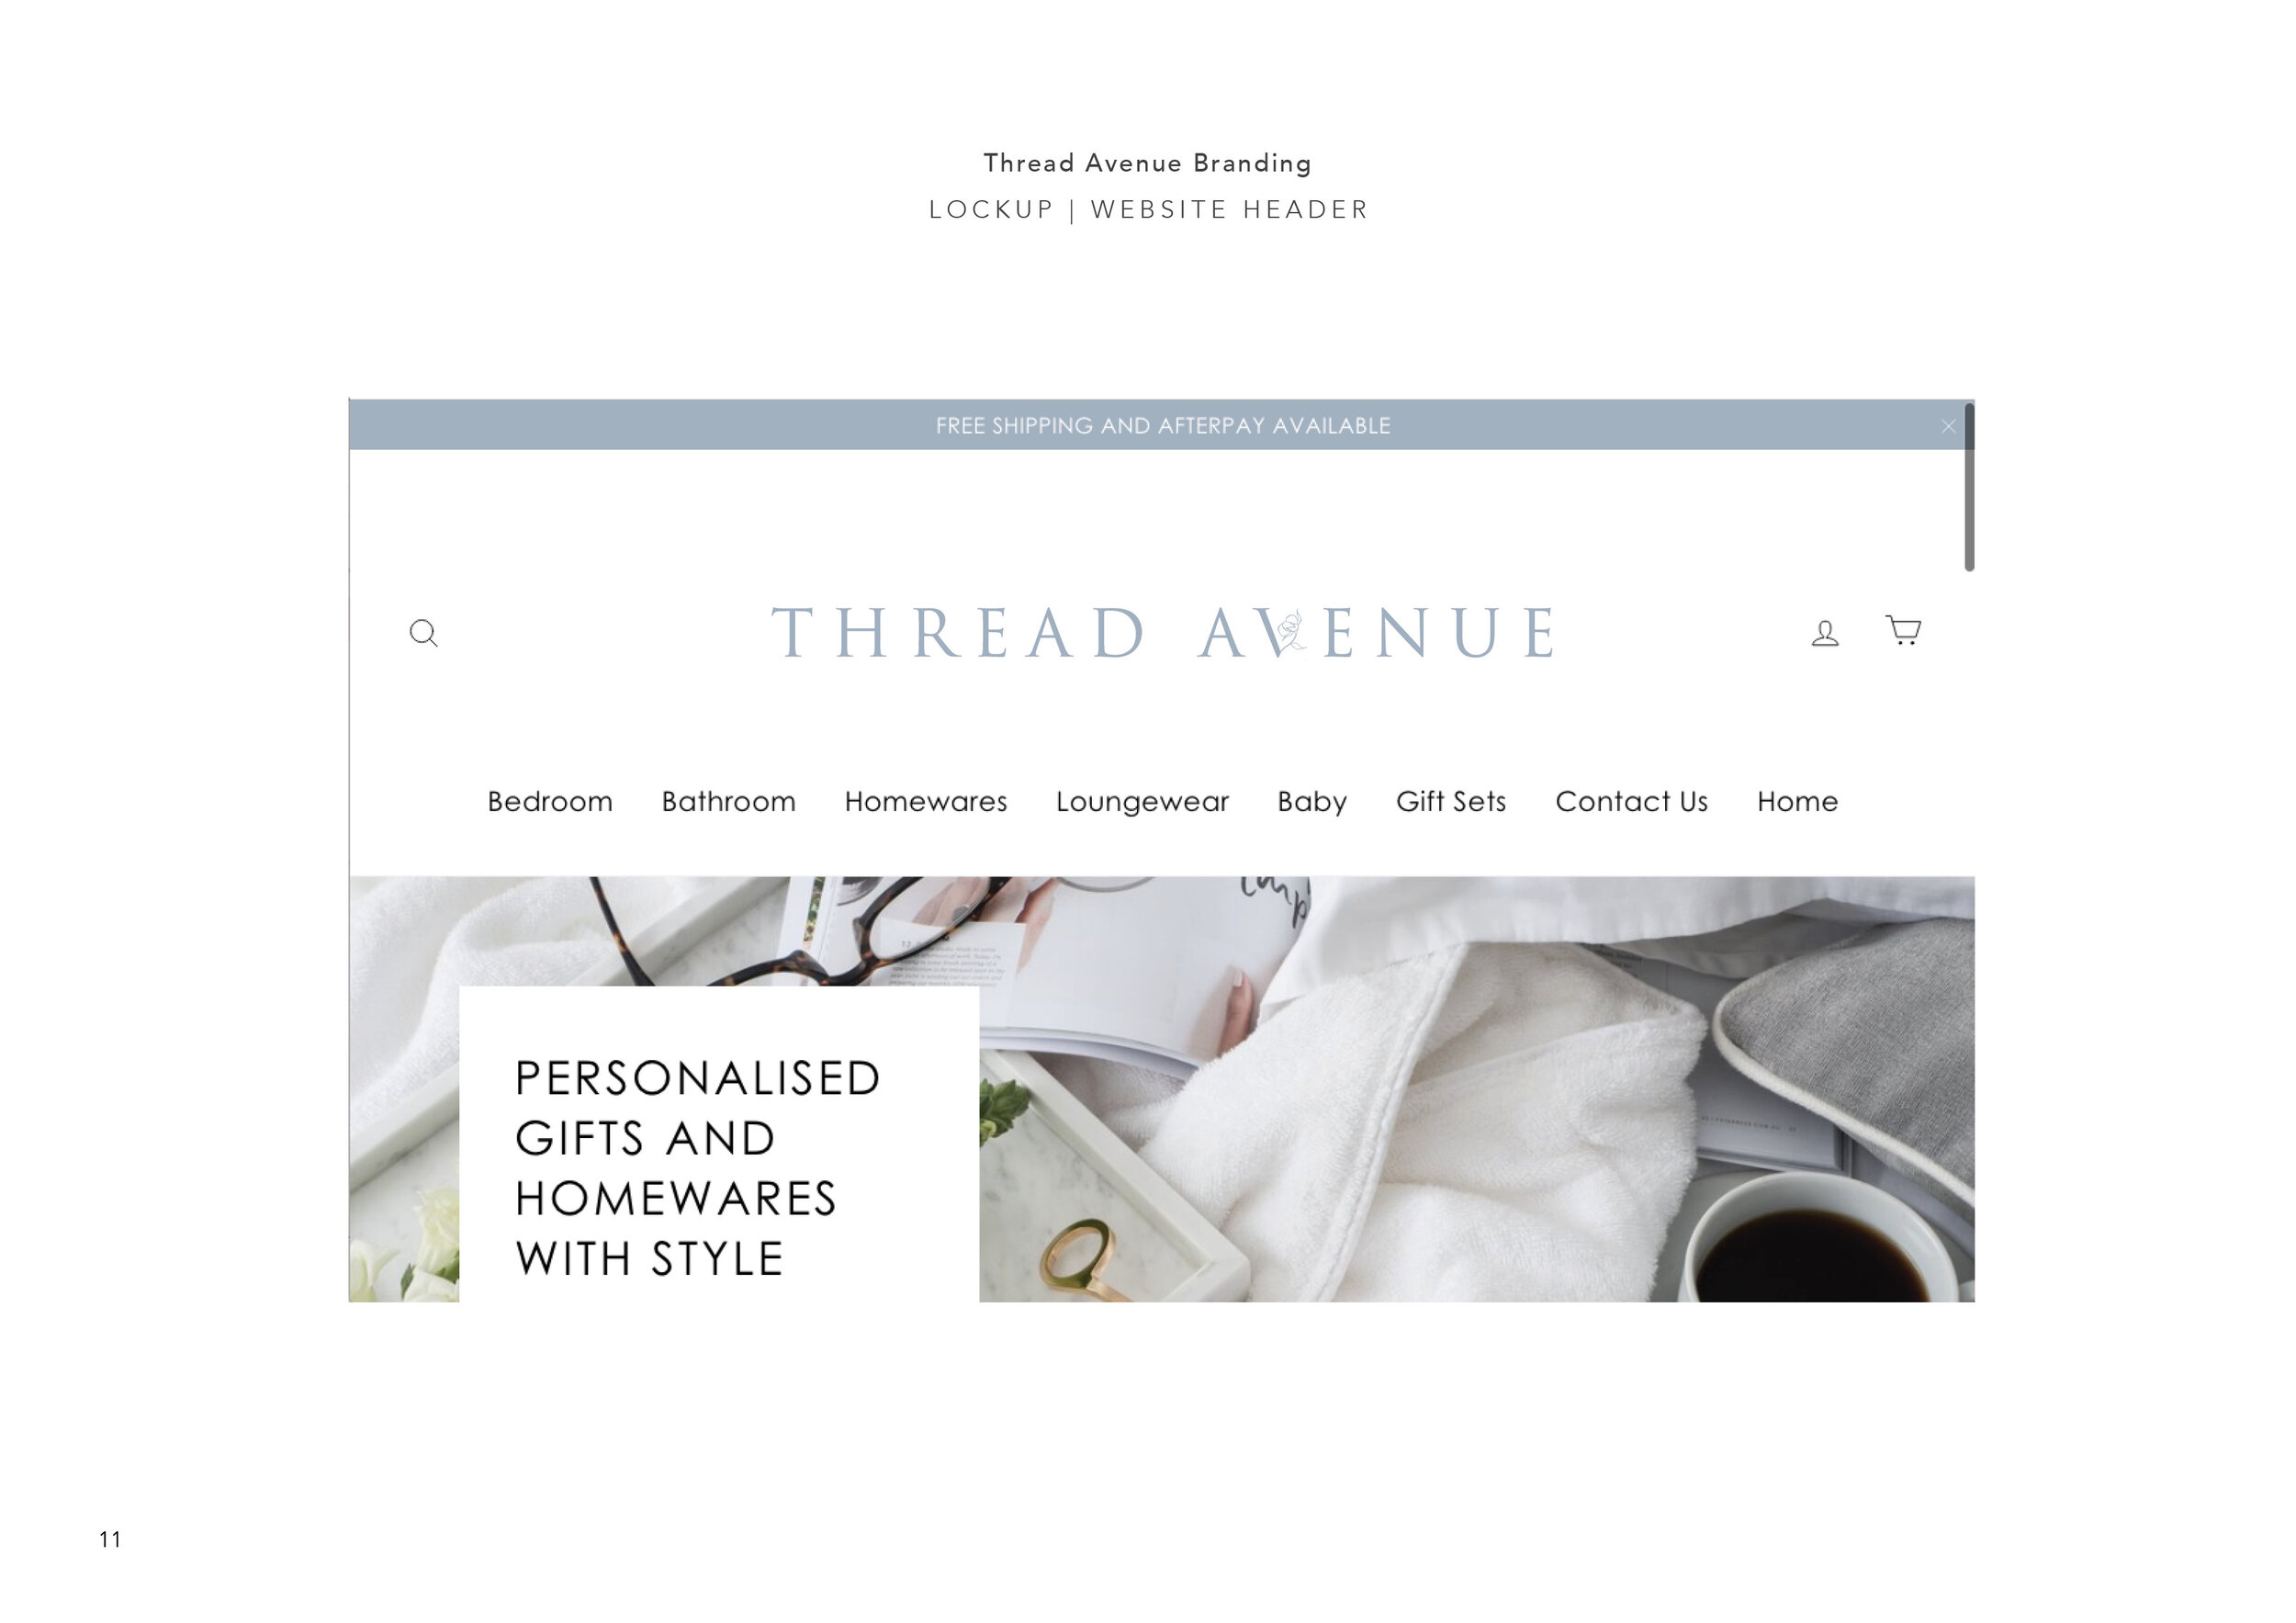 Thread Avenue Brand Guidelines11.jpg